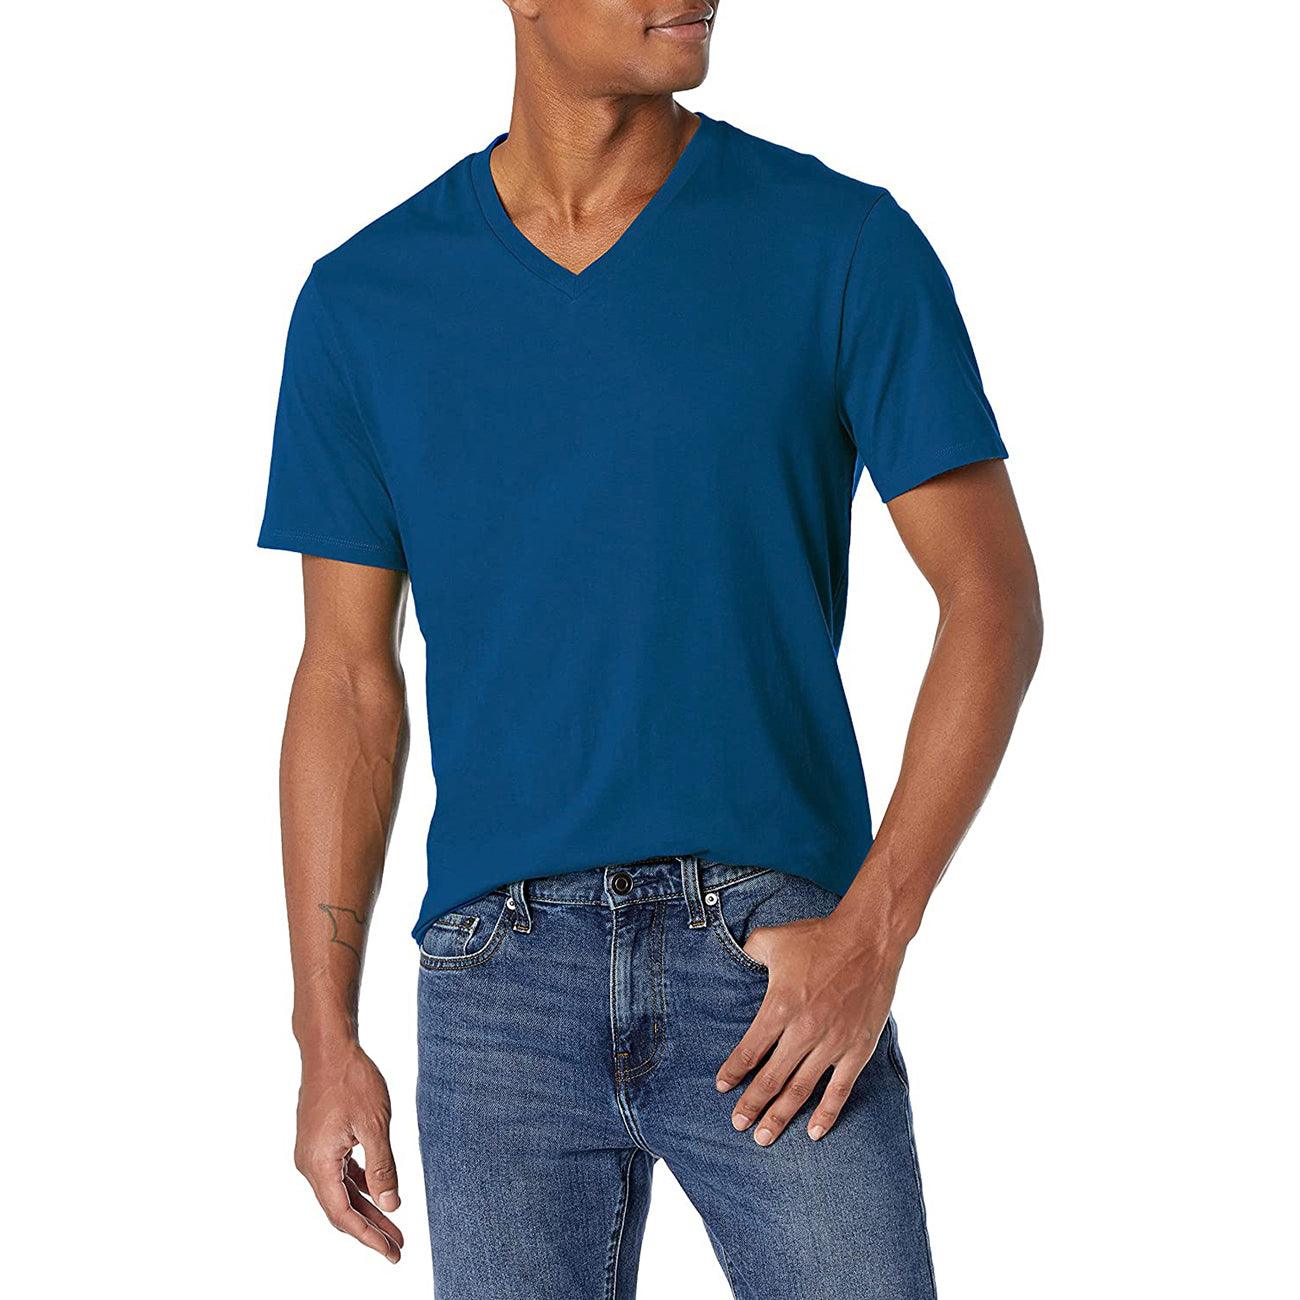 Men's V-Neck Soft Cotton T-Shirt - Brands River